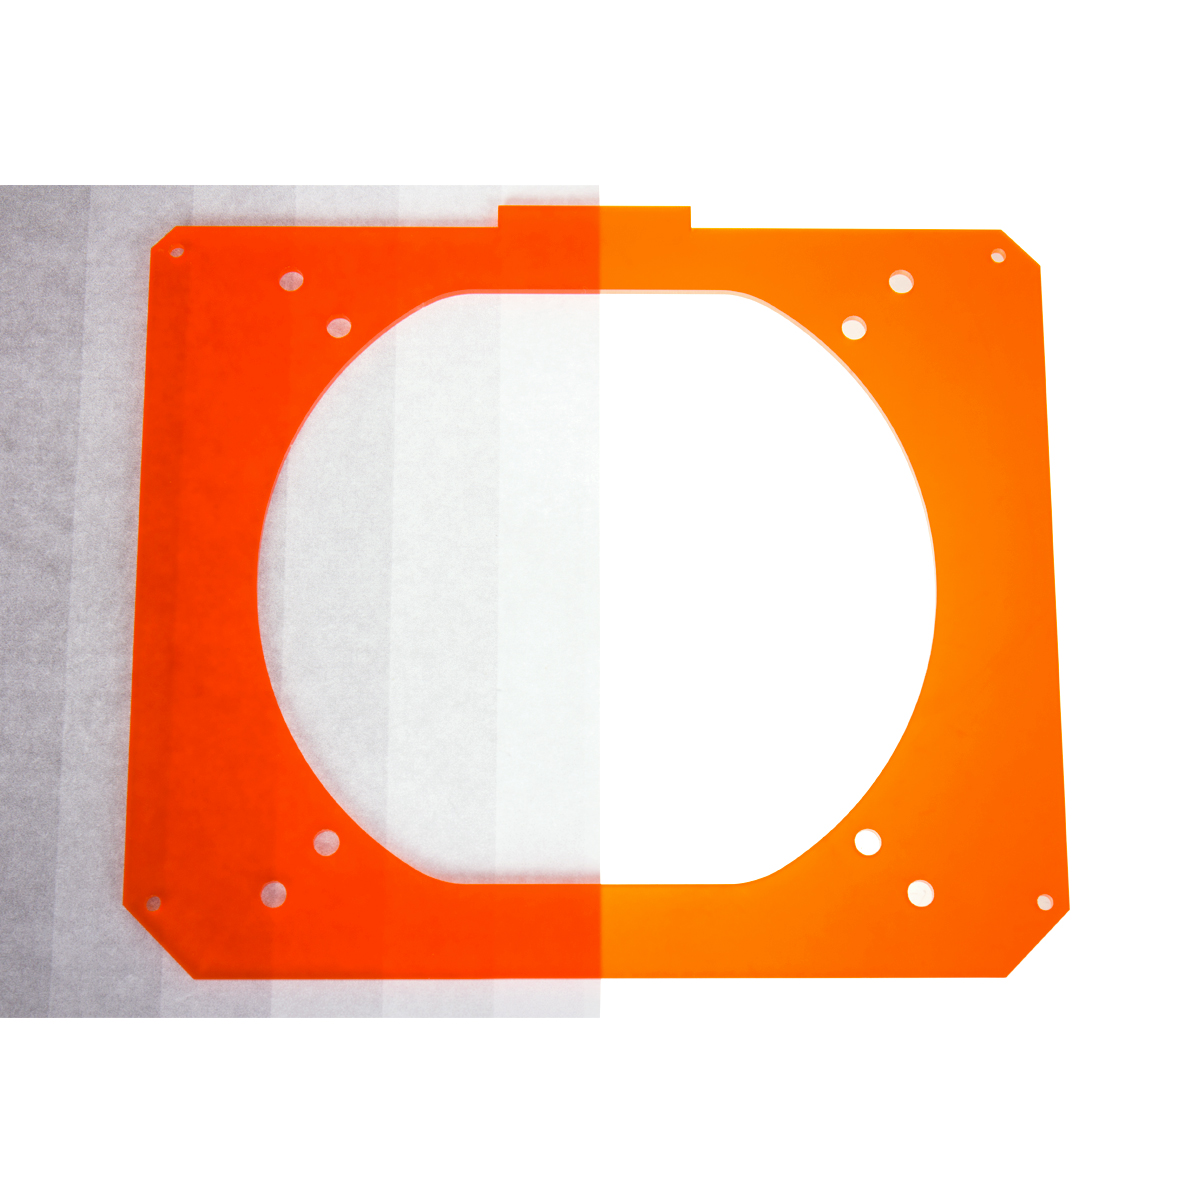 Lazer3D - Lazer3D LZ7 Left Panel - Mandarin Orange Open